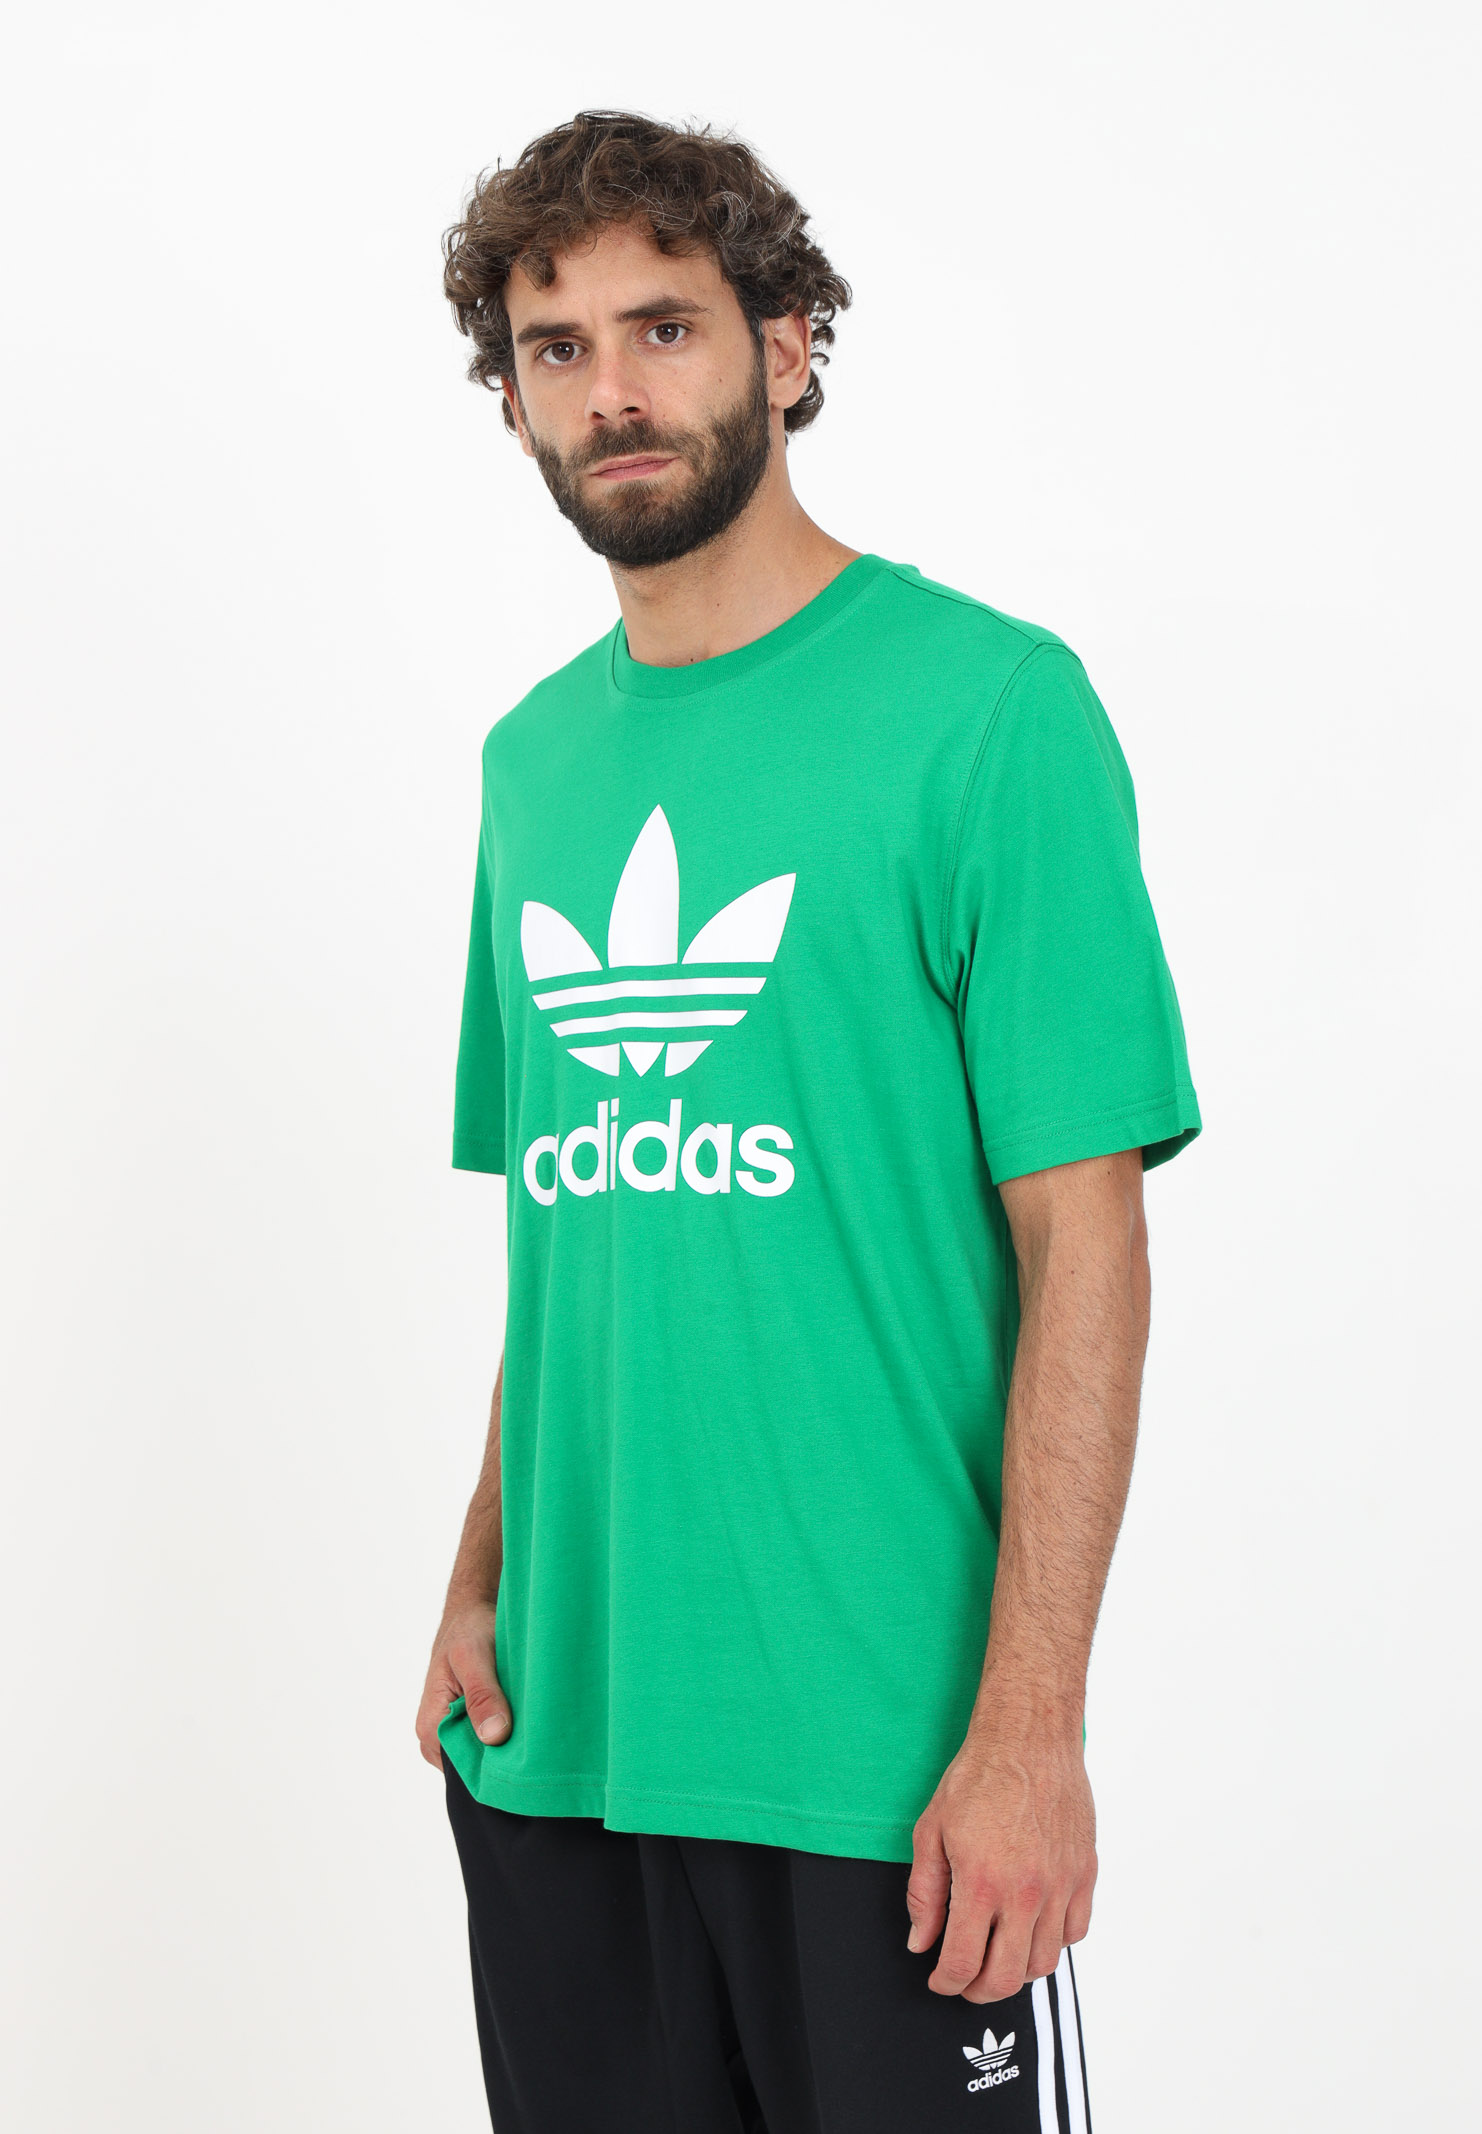 Adicolor Classics ADIDAS - Trefoil - t-shirt green men\'s Pavidas ORIGINALS